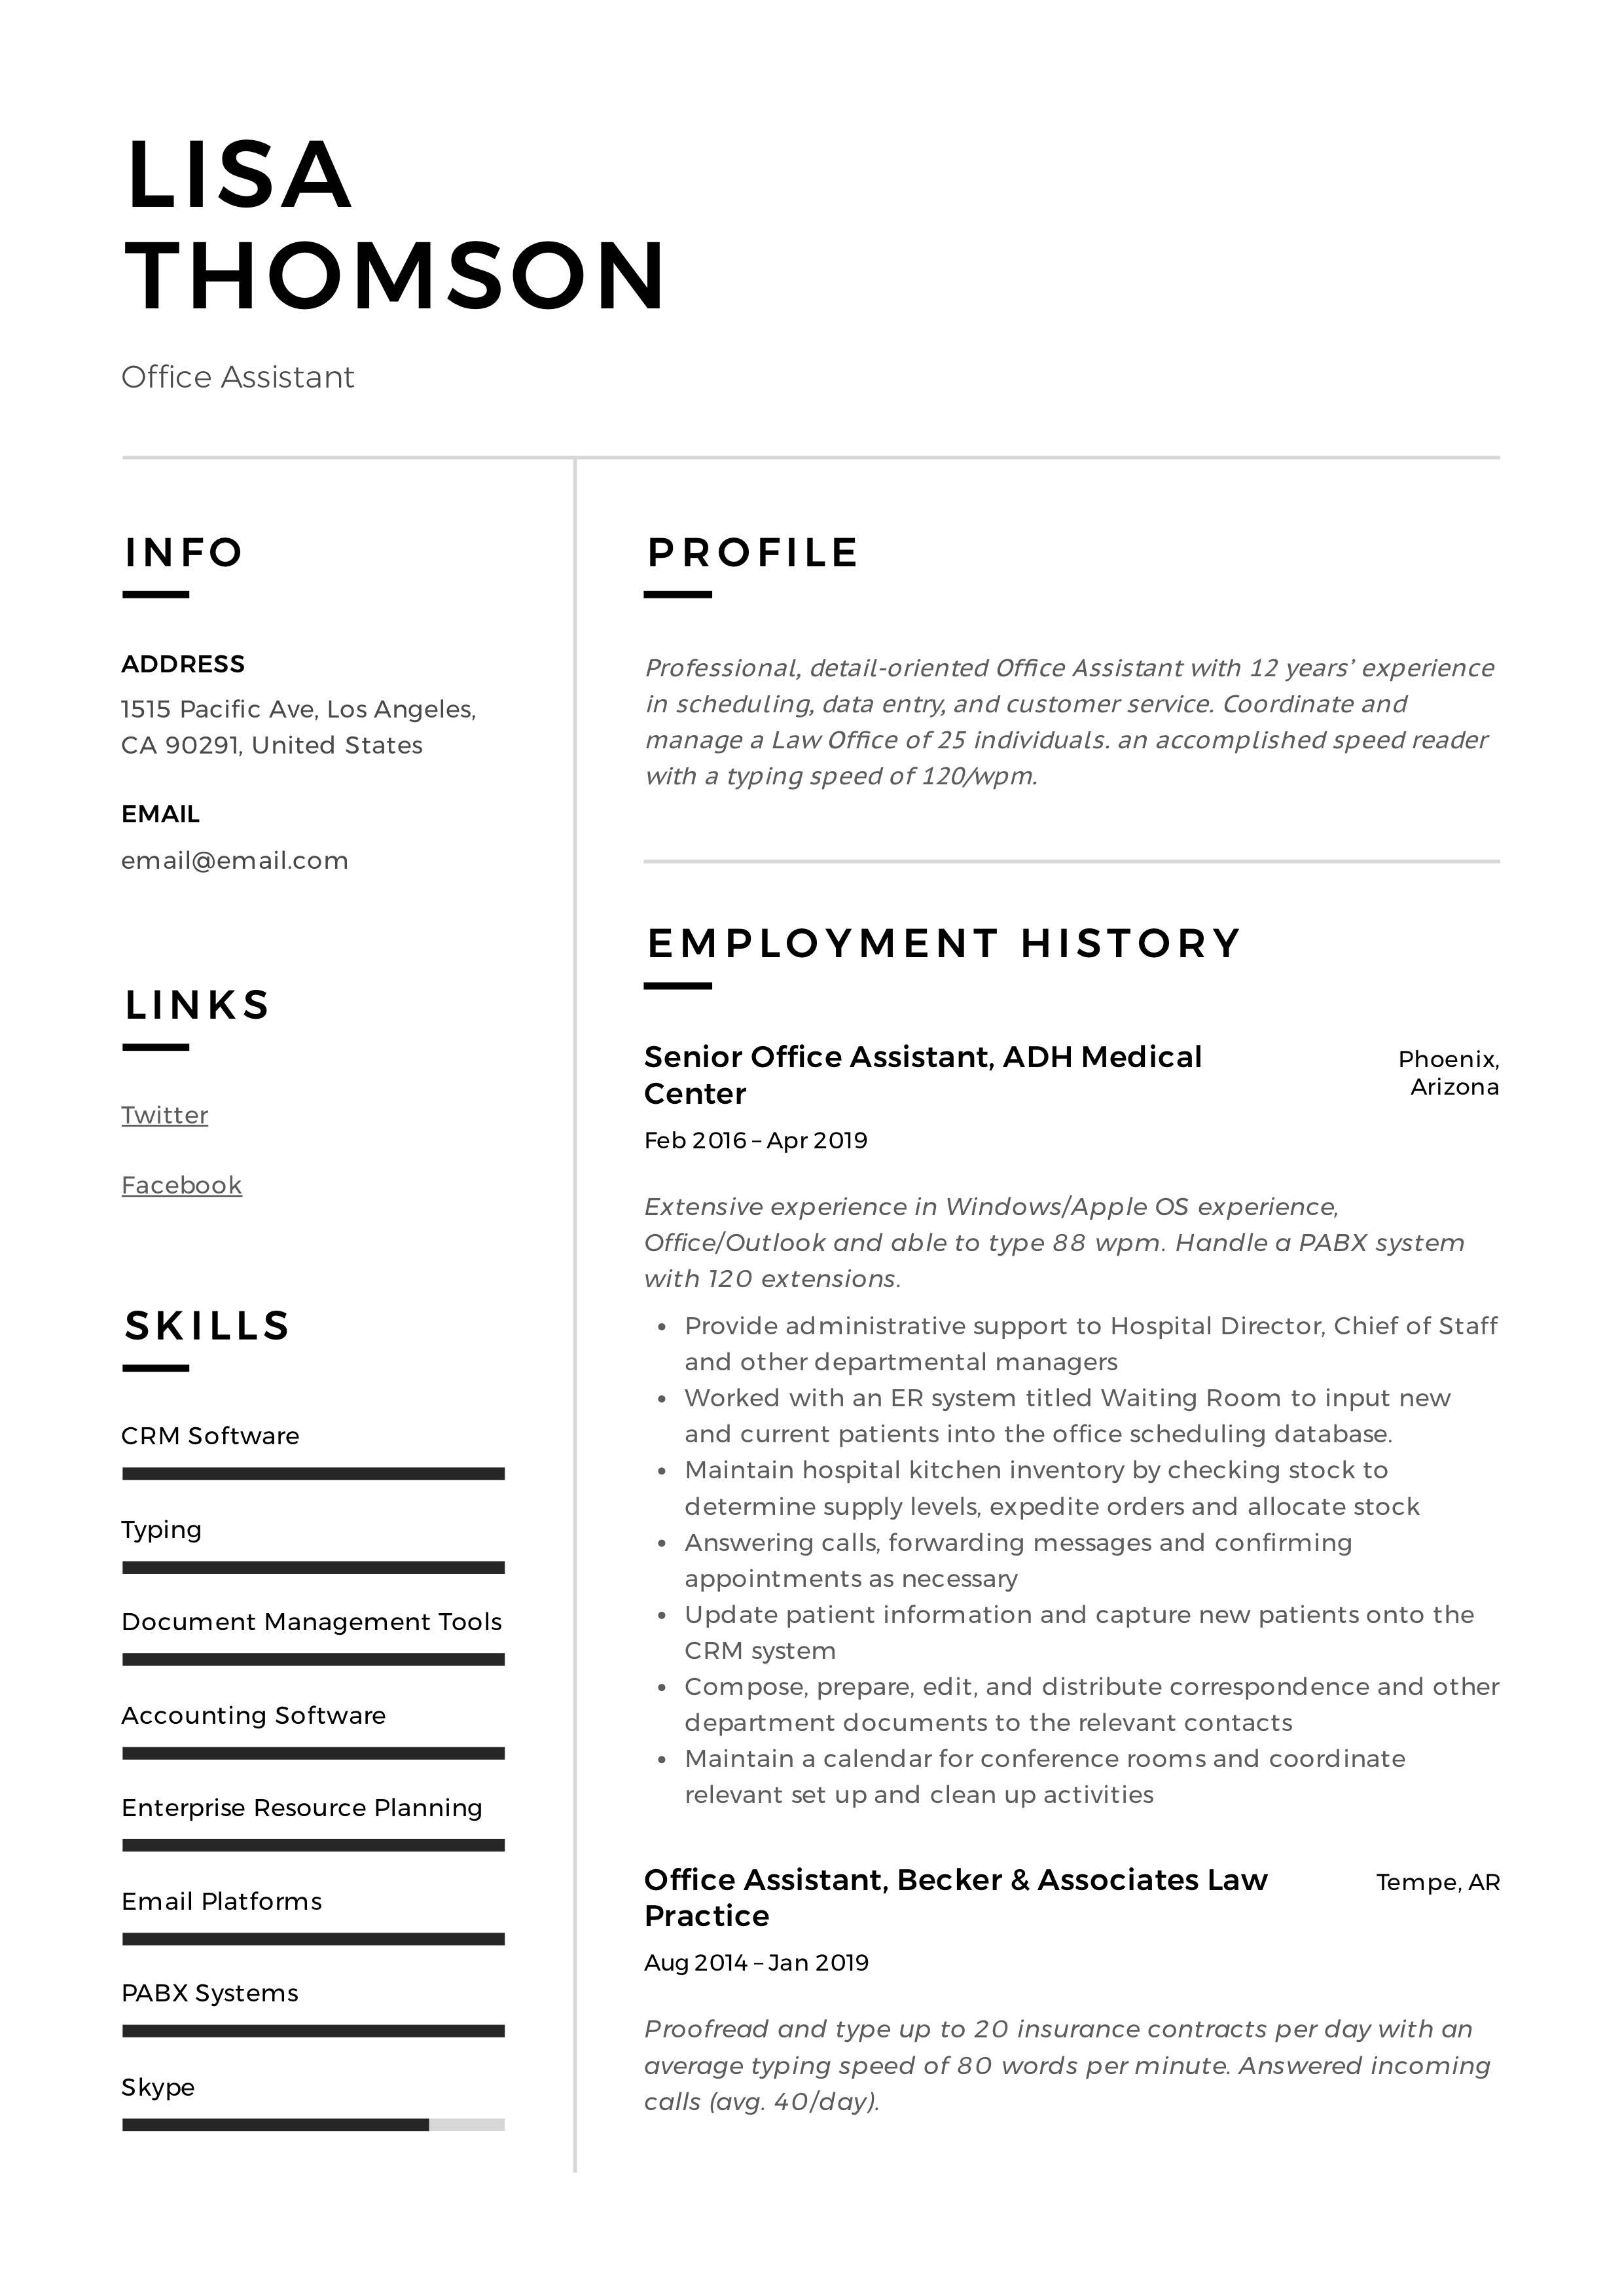 Office Assistant Resume Lisa Thomson Resume Office Assistant 11 office assistant resume|wikiresume.com